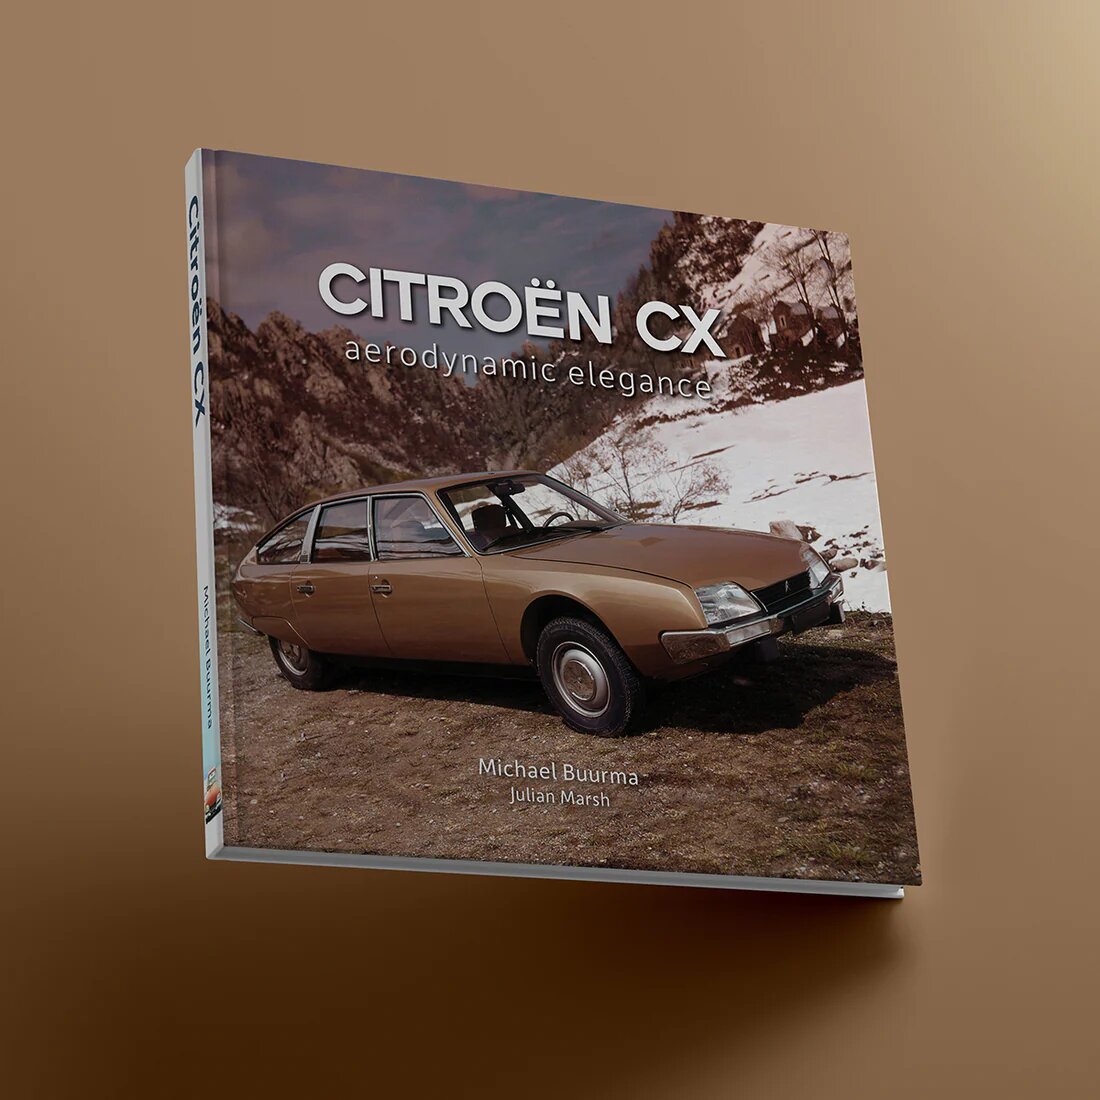 Citroën CX, aerodynamic elegance (GB)